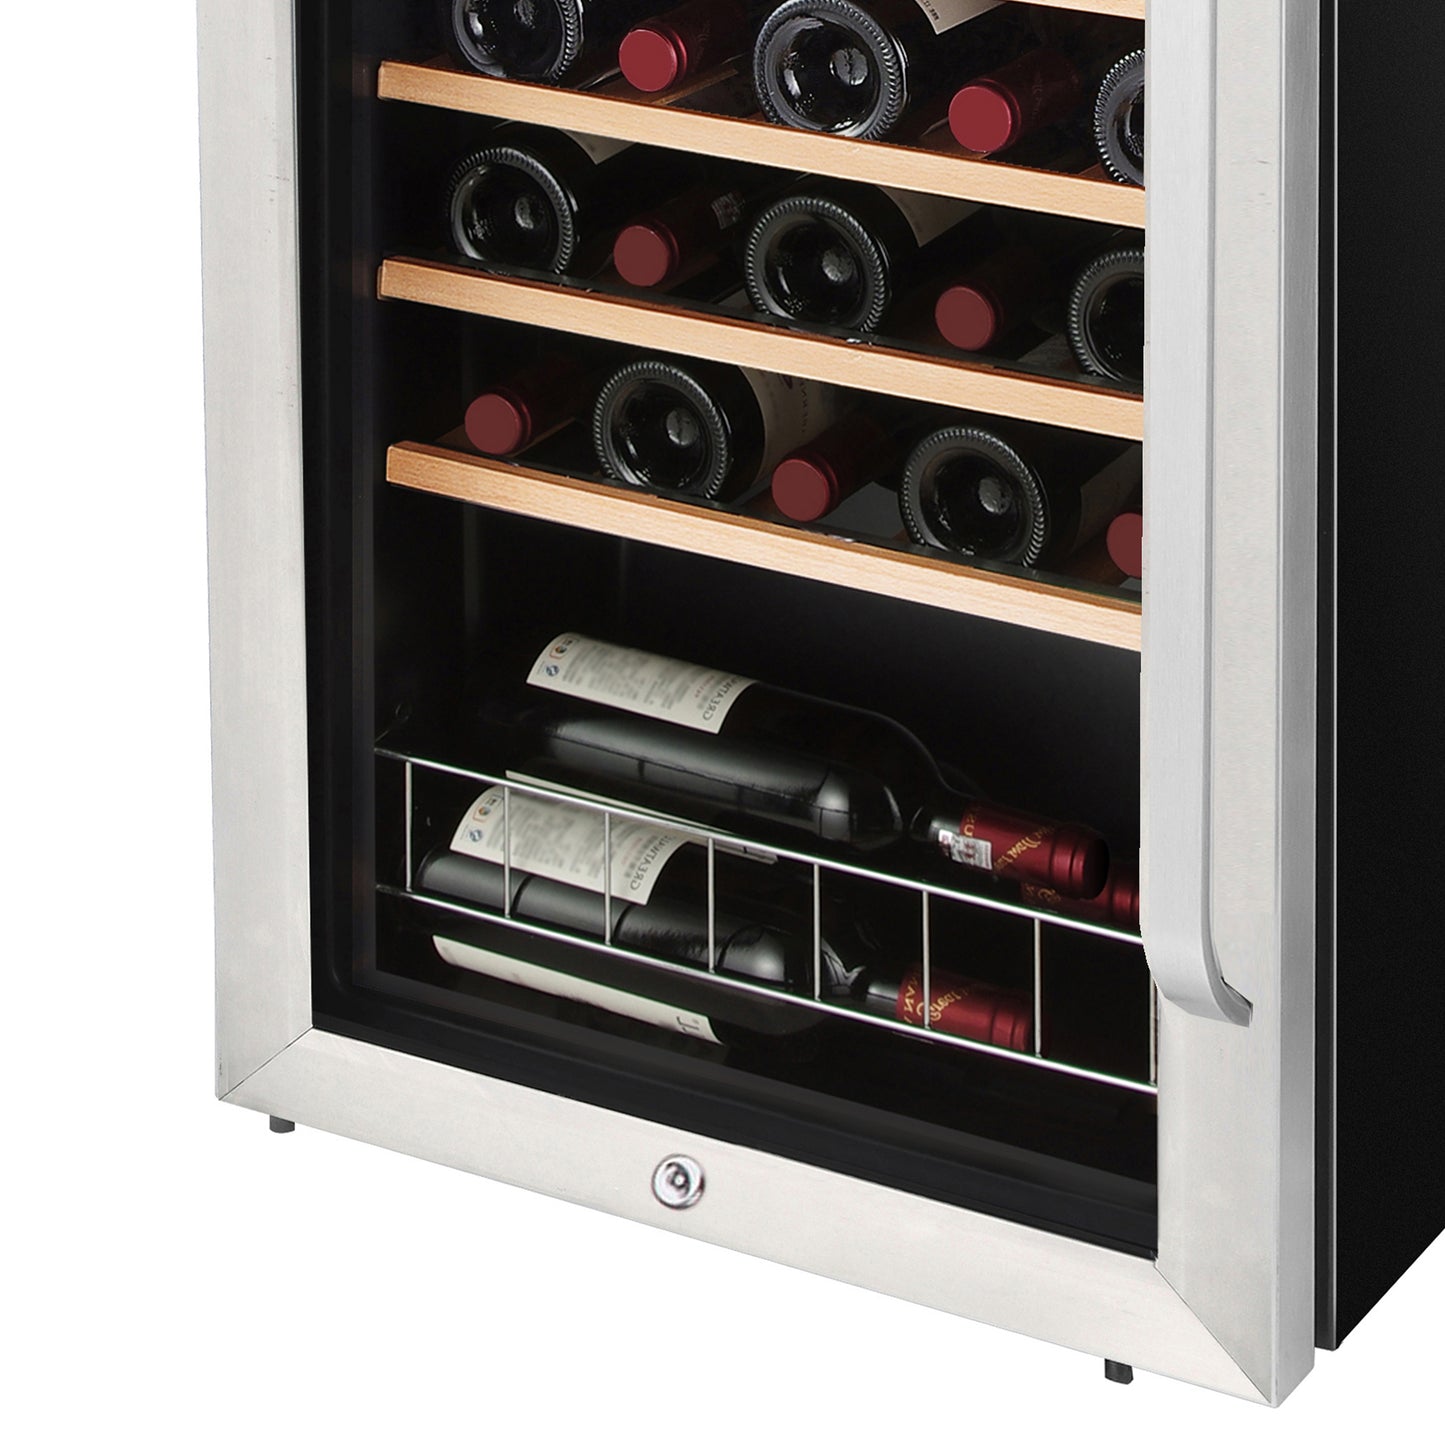 a wine fridge with bottles inside, stainless steel glass door, 166-bottle capacity